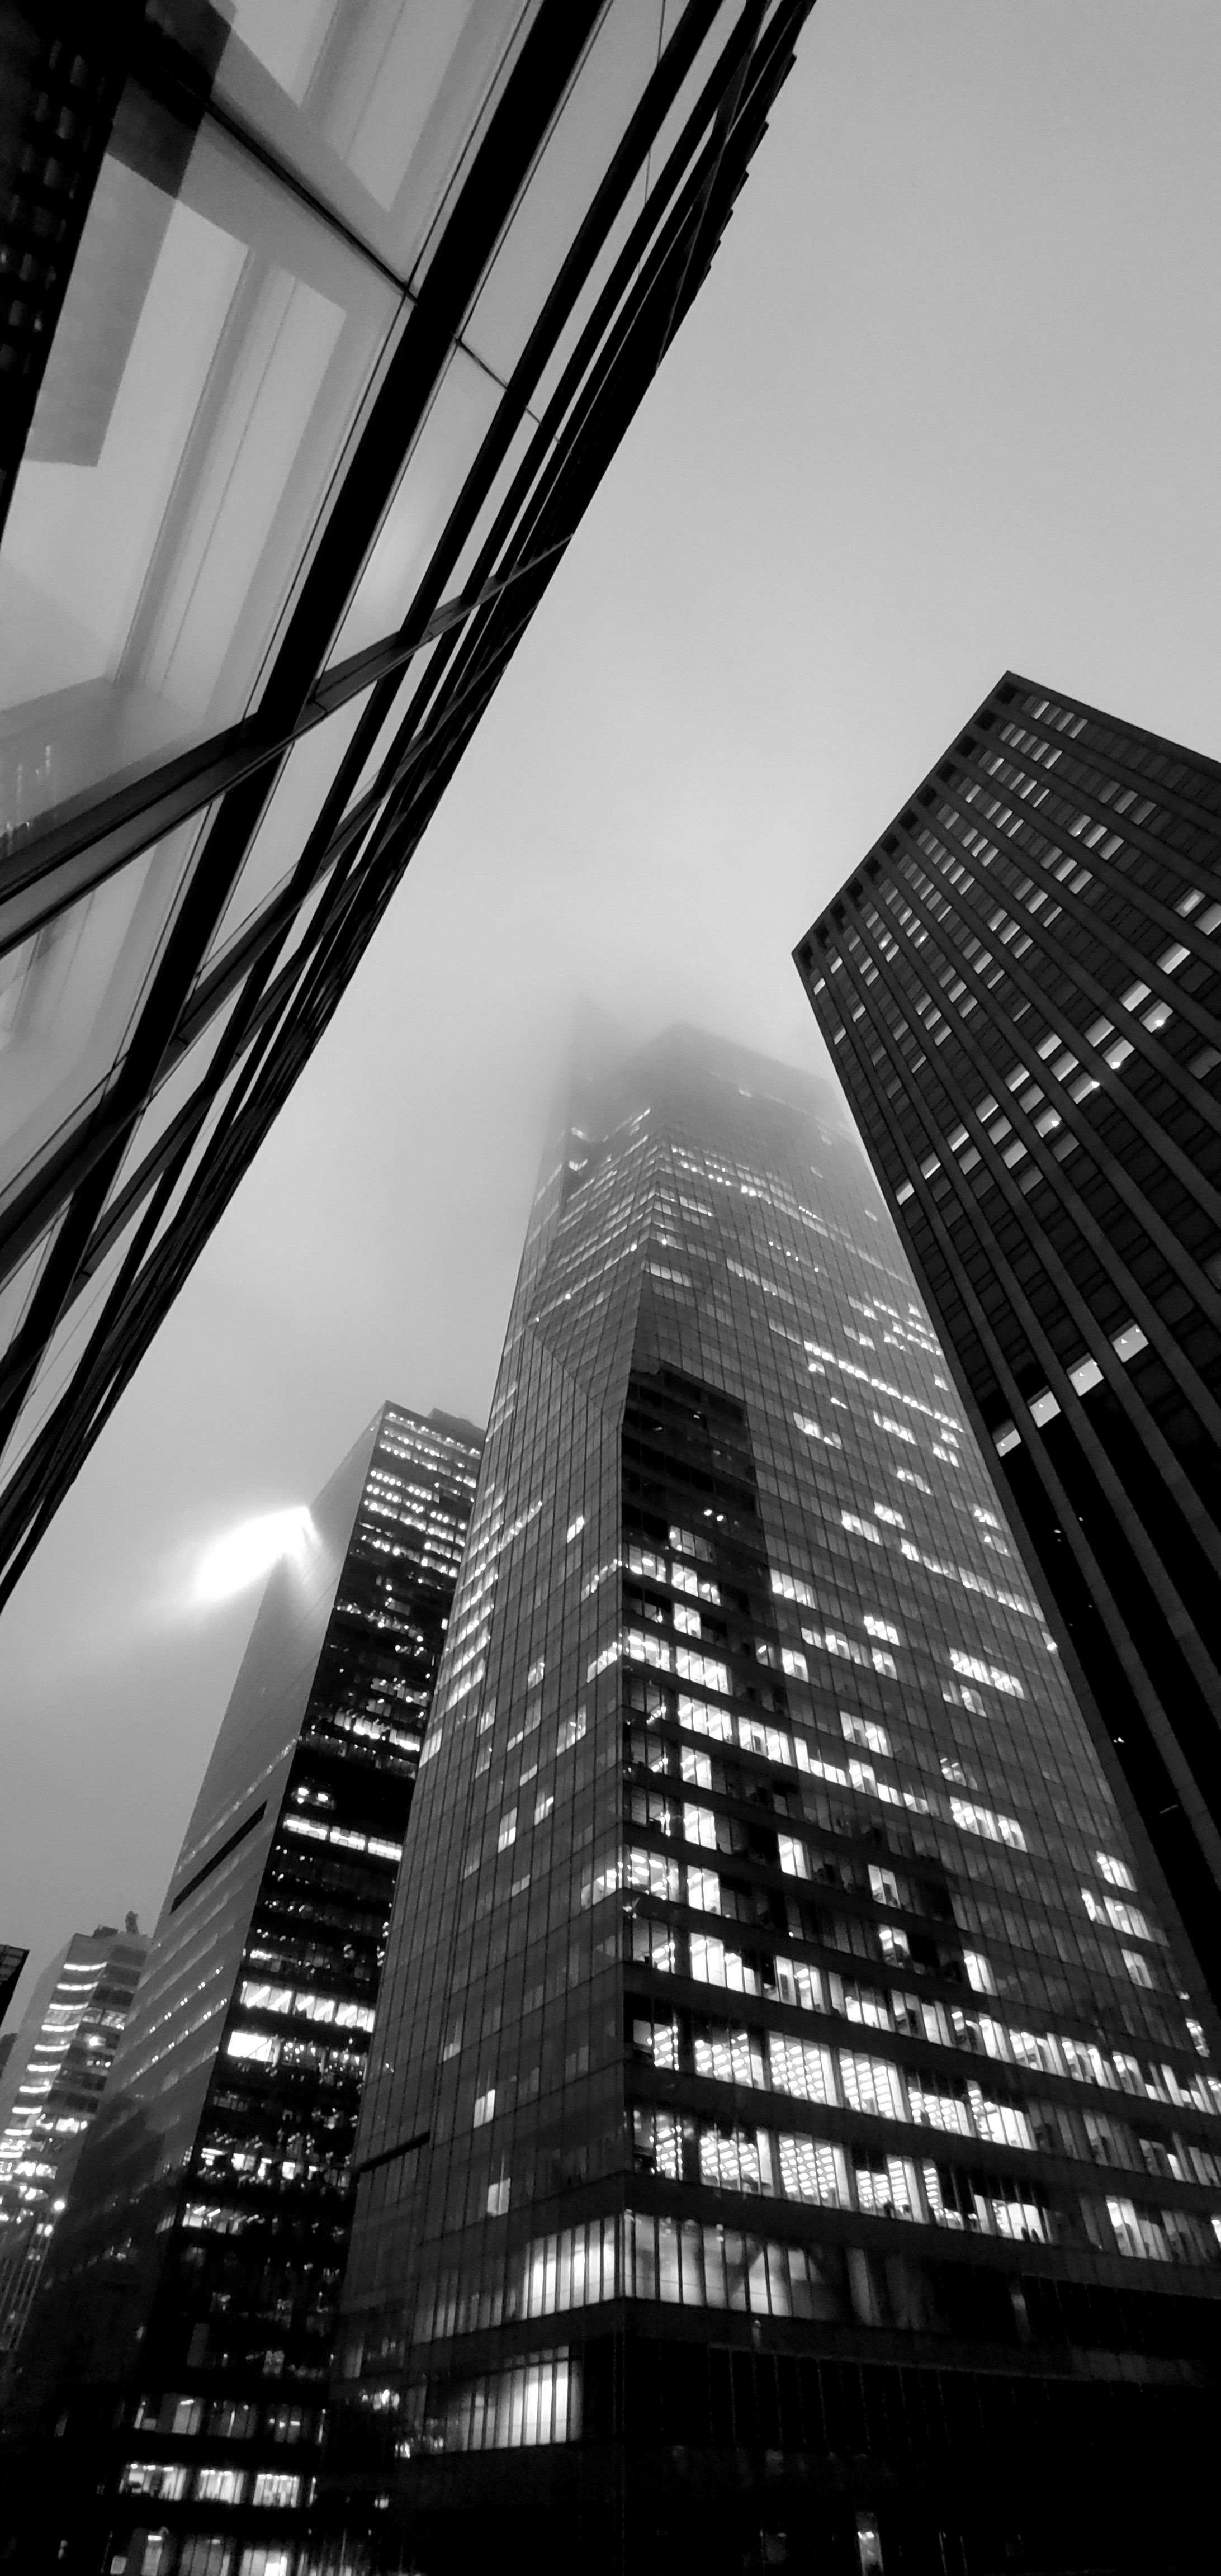 Wallpapers : New York City, black, white, building, architecture, clouds, monochrome, skyscraper, vertical, gray, portrait display, overcast, mist, urban, city lights 2184x4608